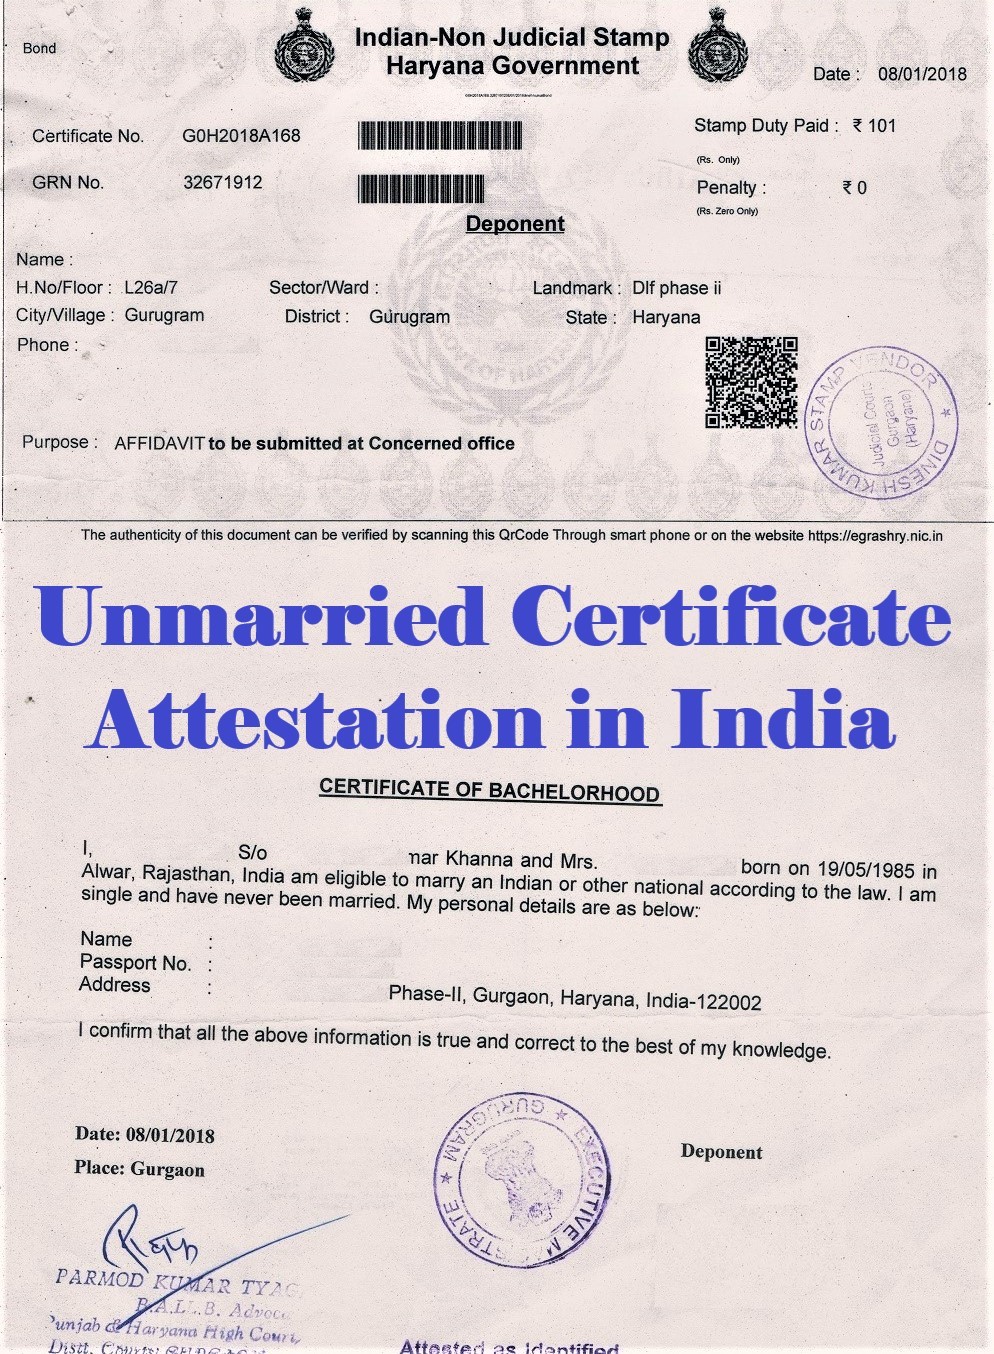 Unmarried Certificate Attestation from Brunei Embassy